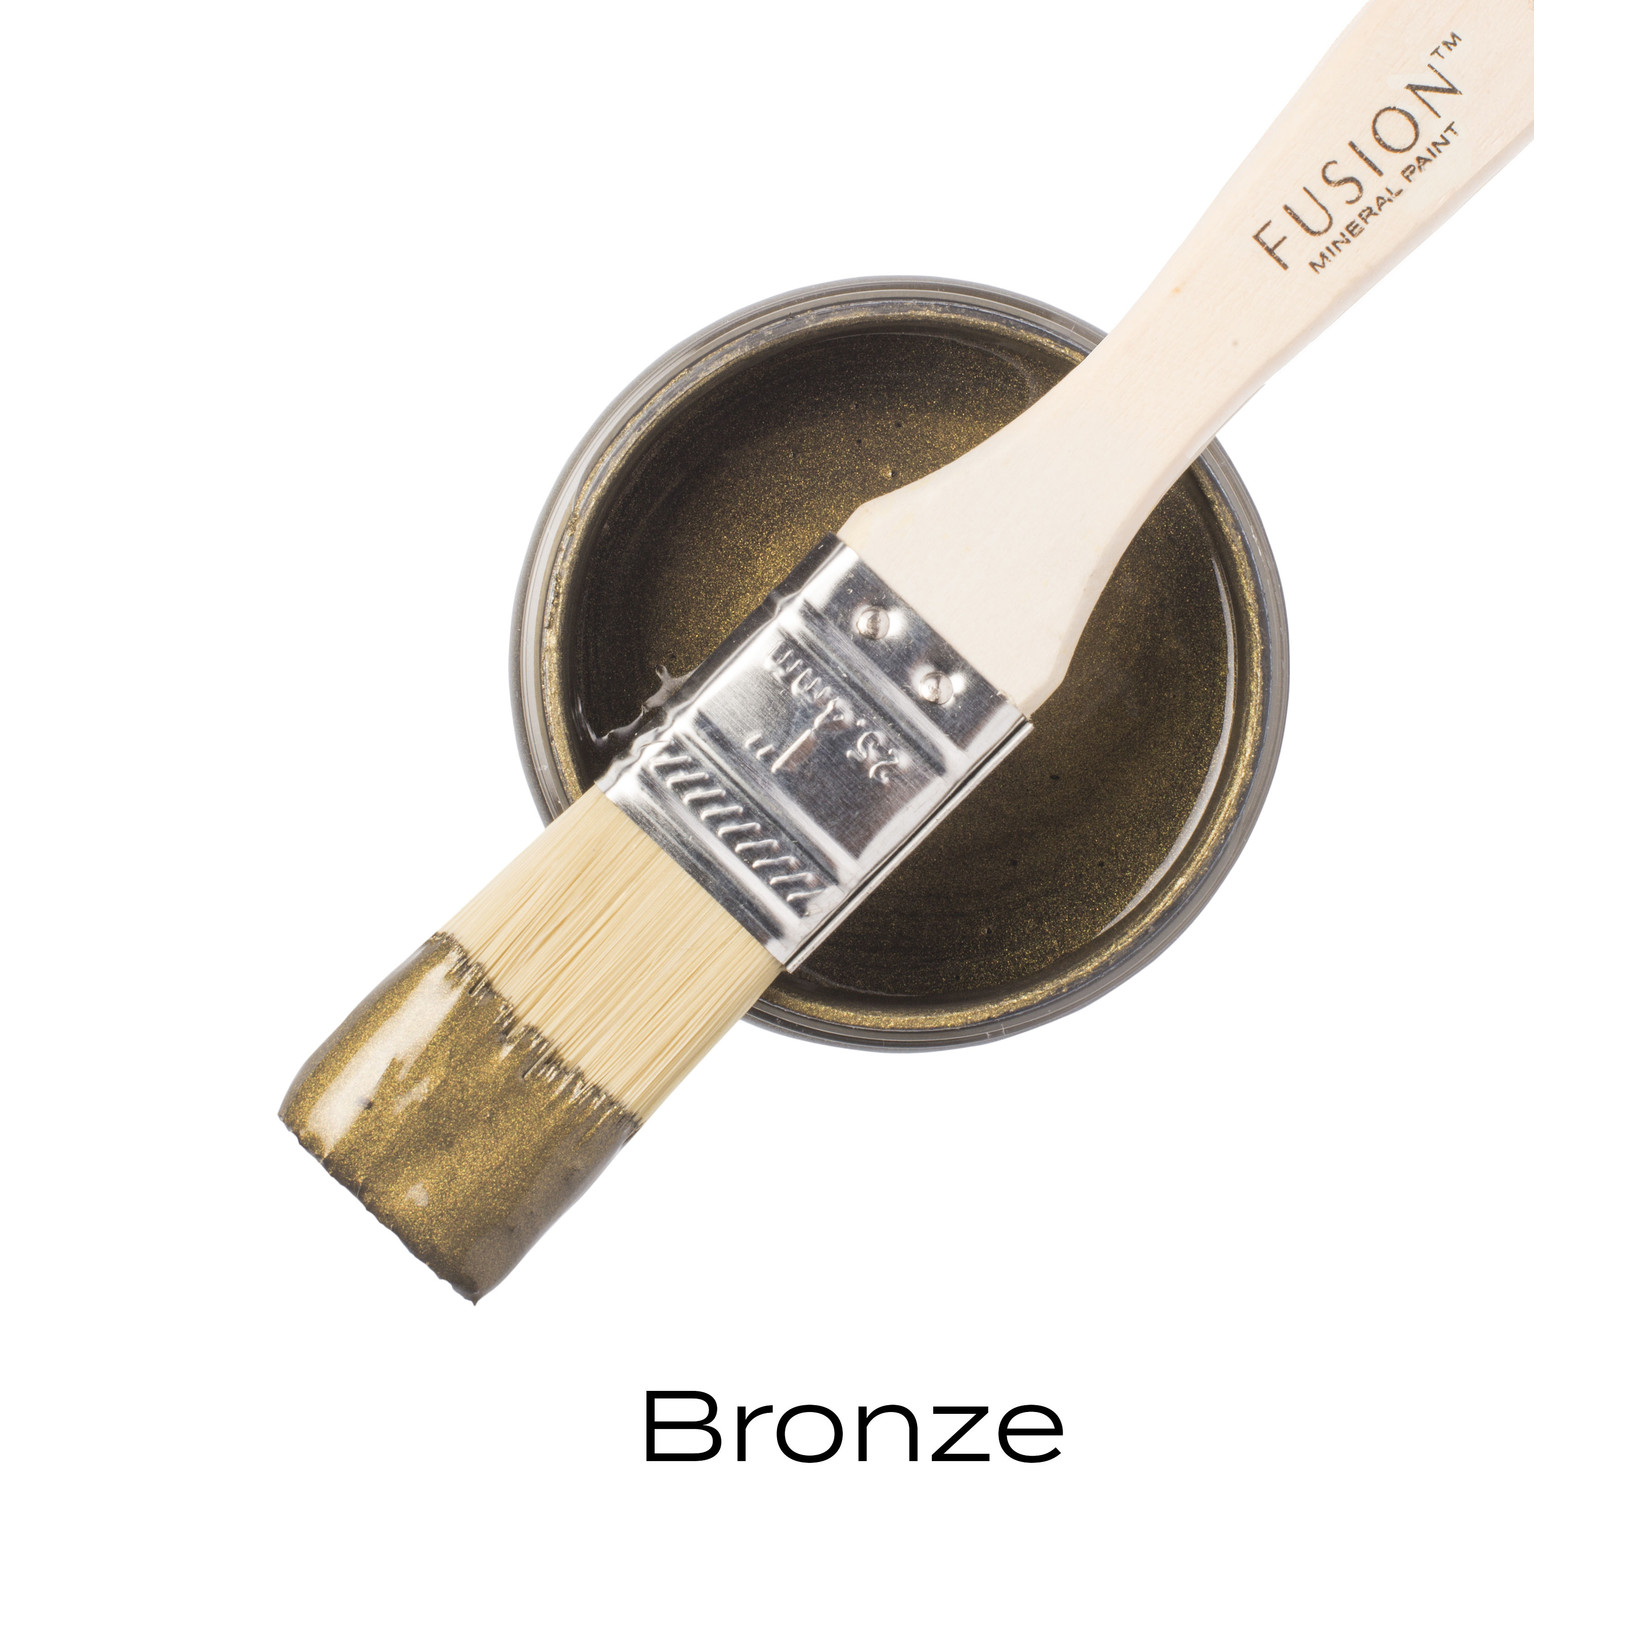 Fusion Mineral Paint™ - Metallic Bronze